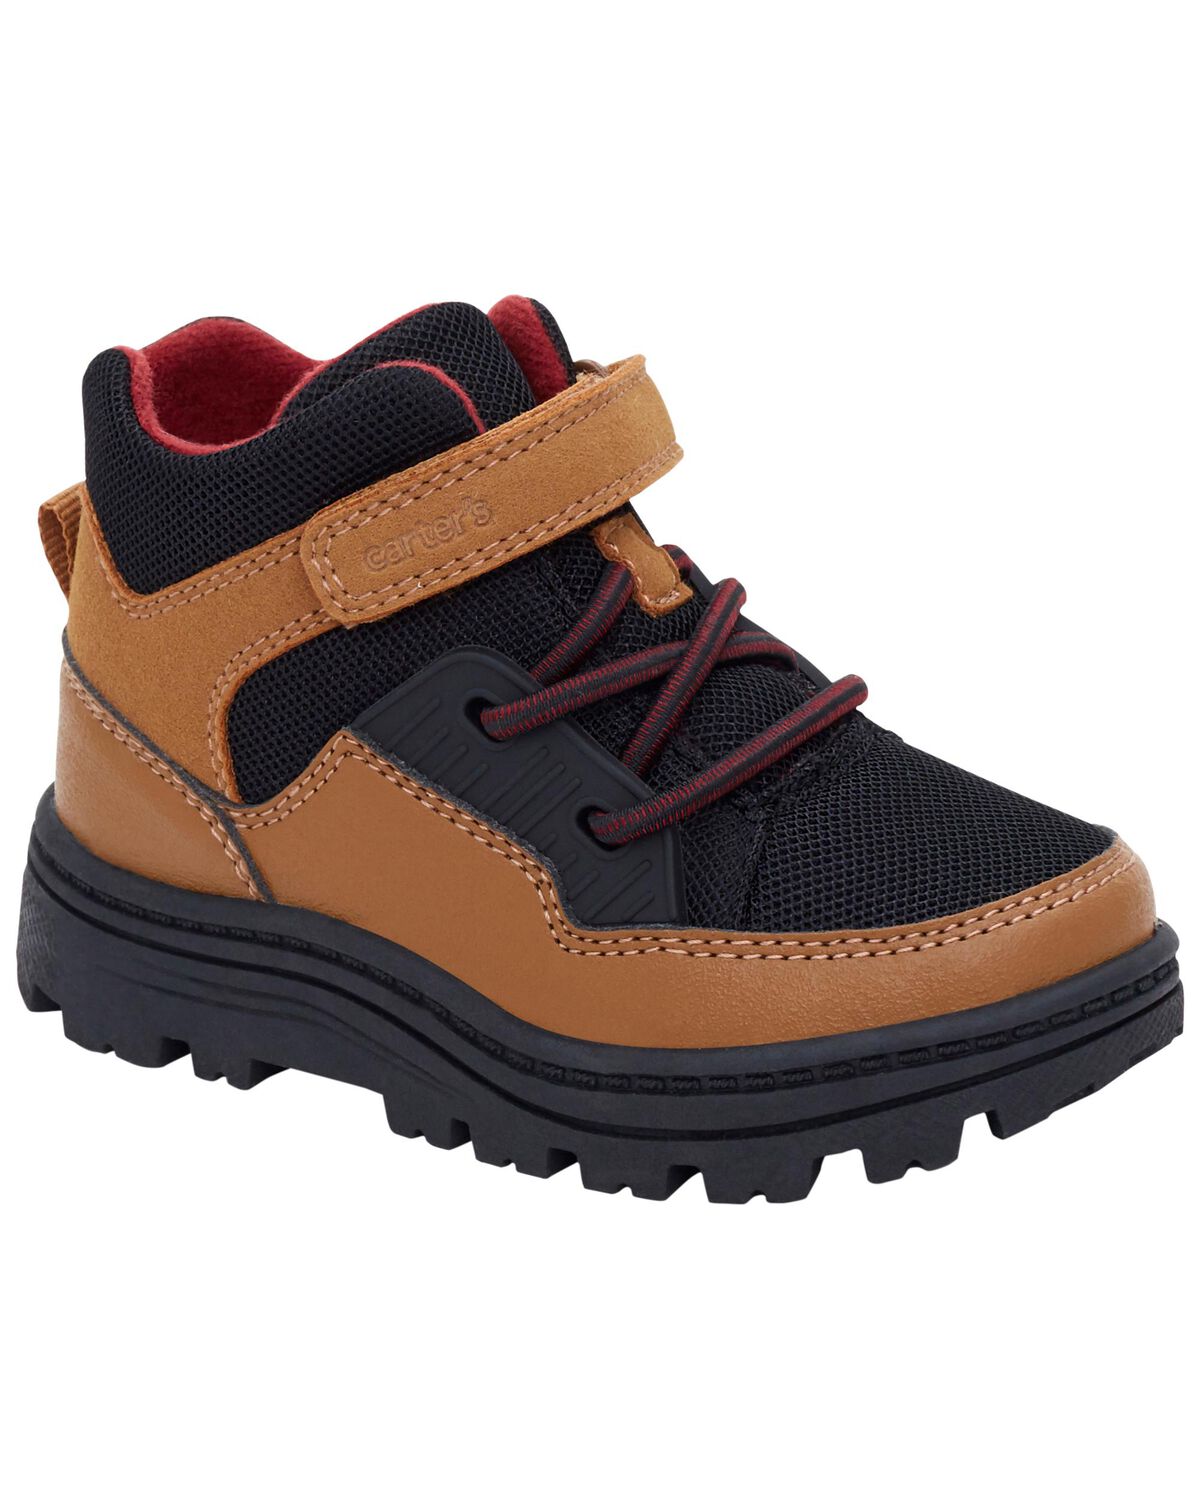 Tan/Black Toddler Hiking Boots | carters.com